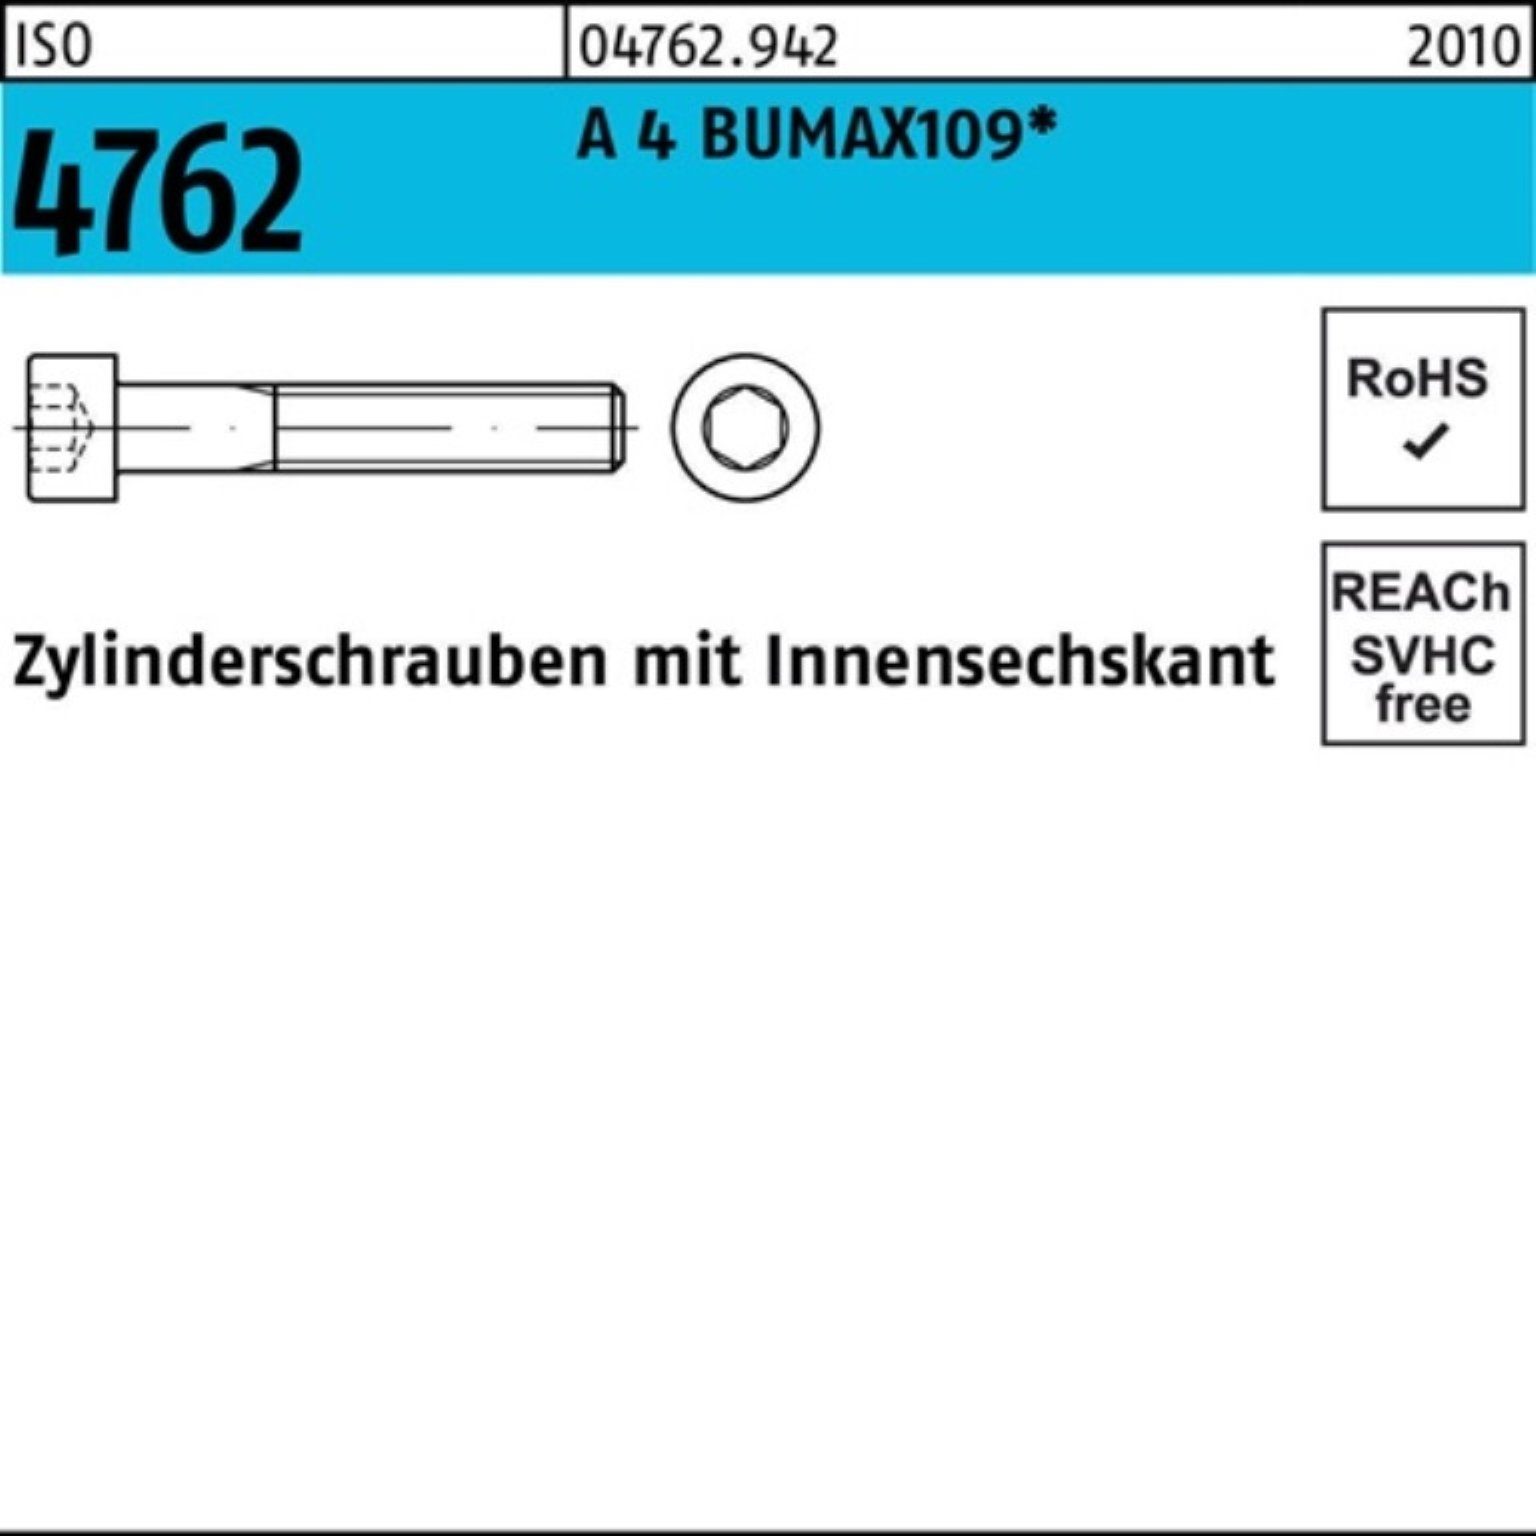 Bufab Zylinderschraube 100er Pack A BUMAX109 Innen-6kt Zylinderschraube 25 4 M12x ISO 4762 70